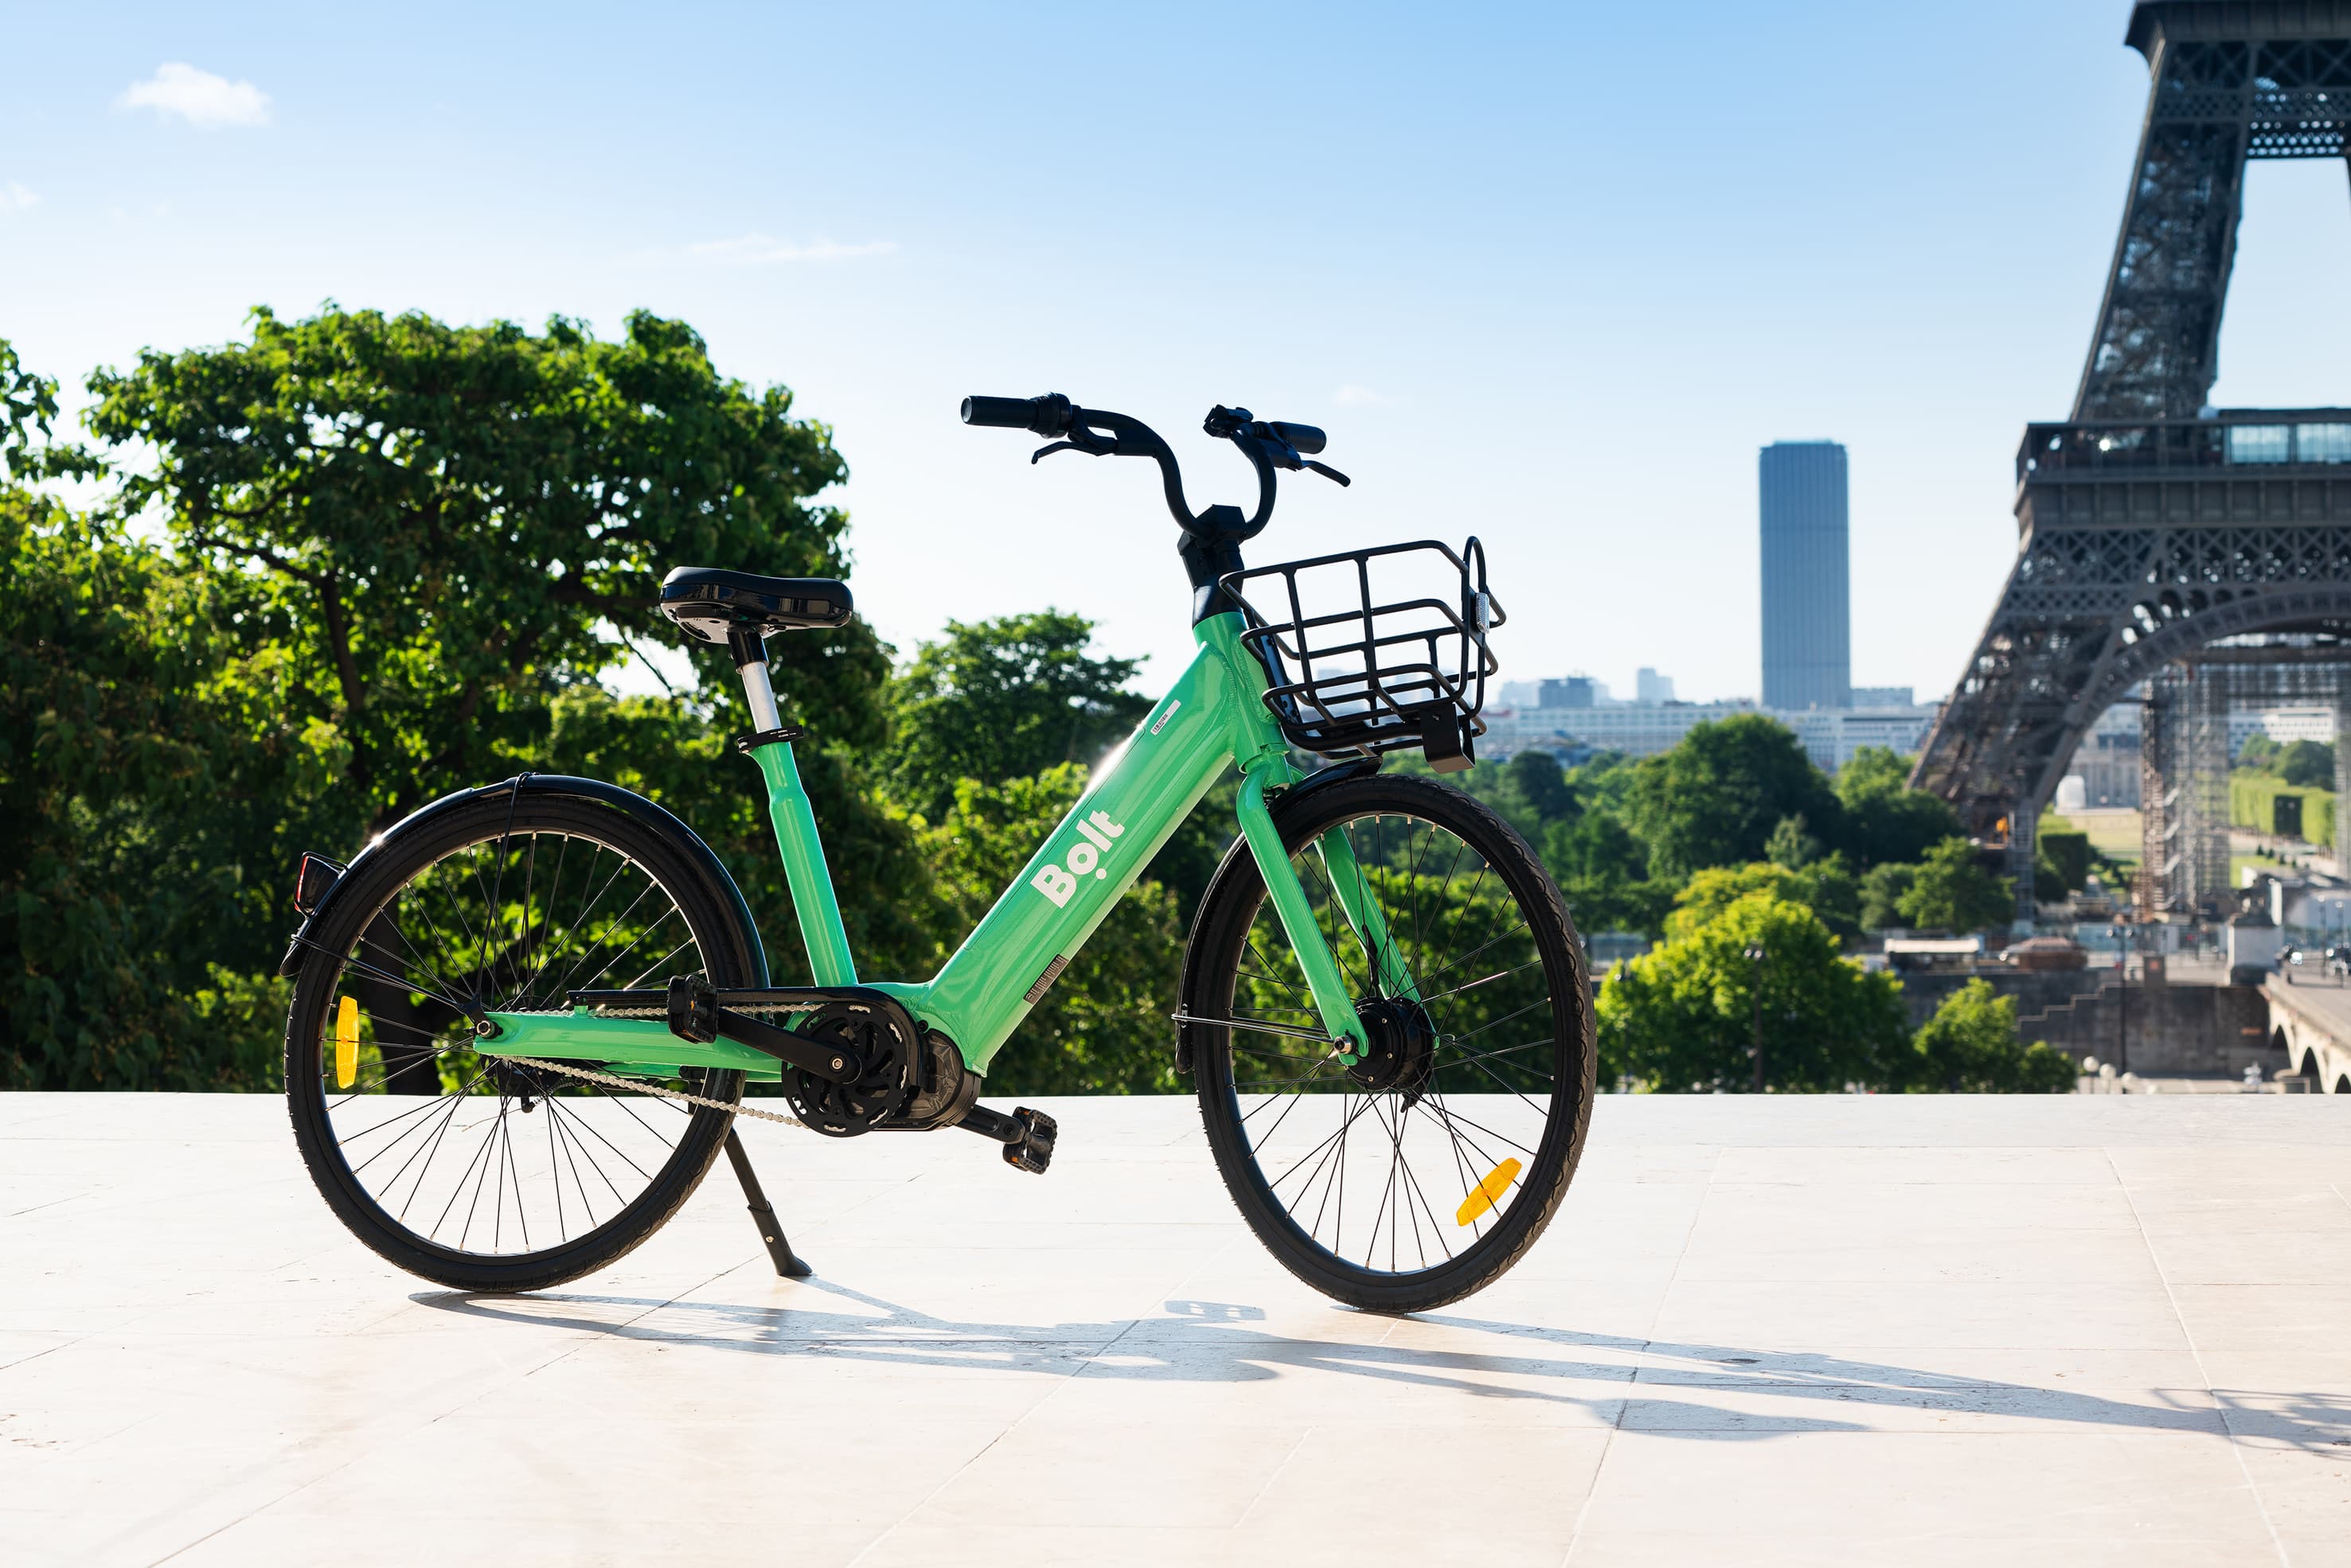 European Uber rival Bolt launches electric bikes in Paris - CNBC